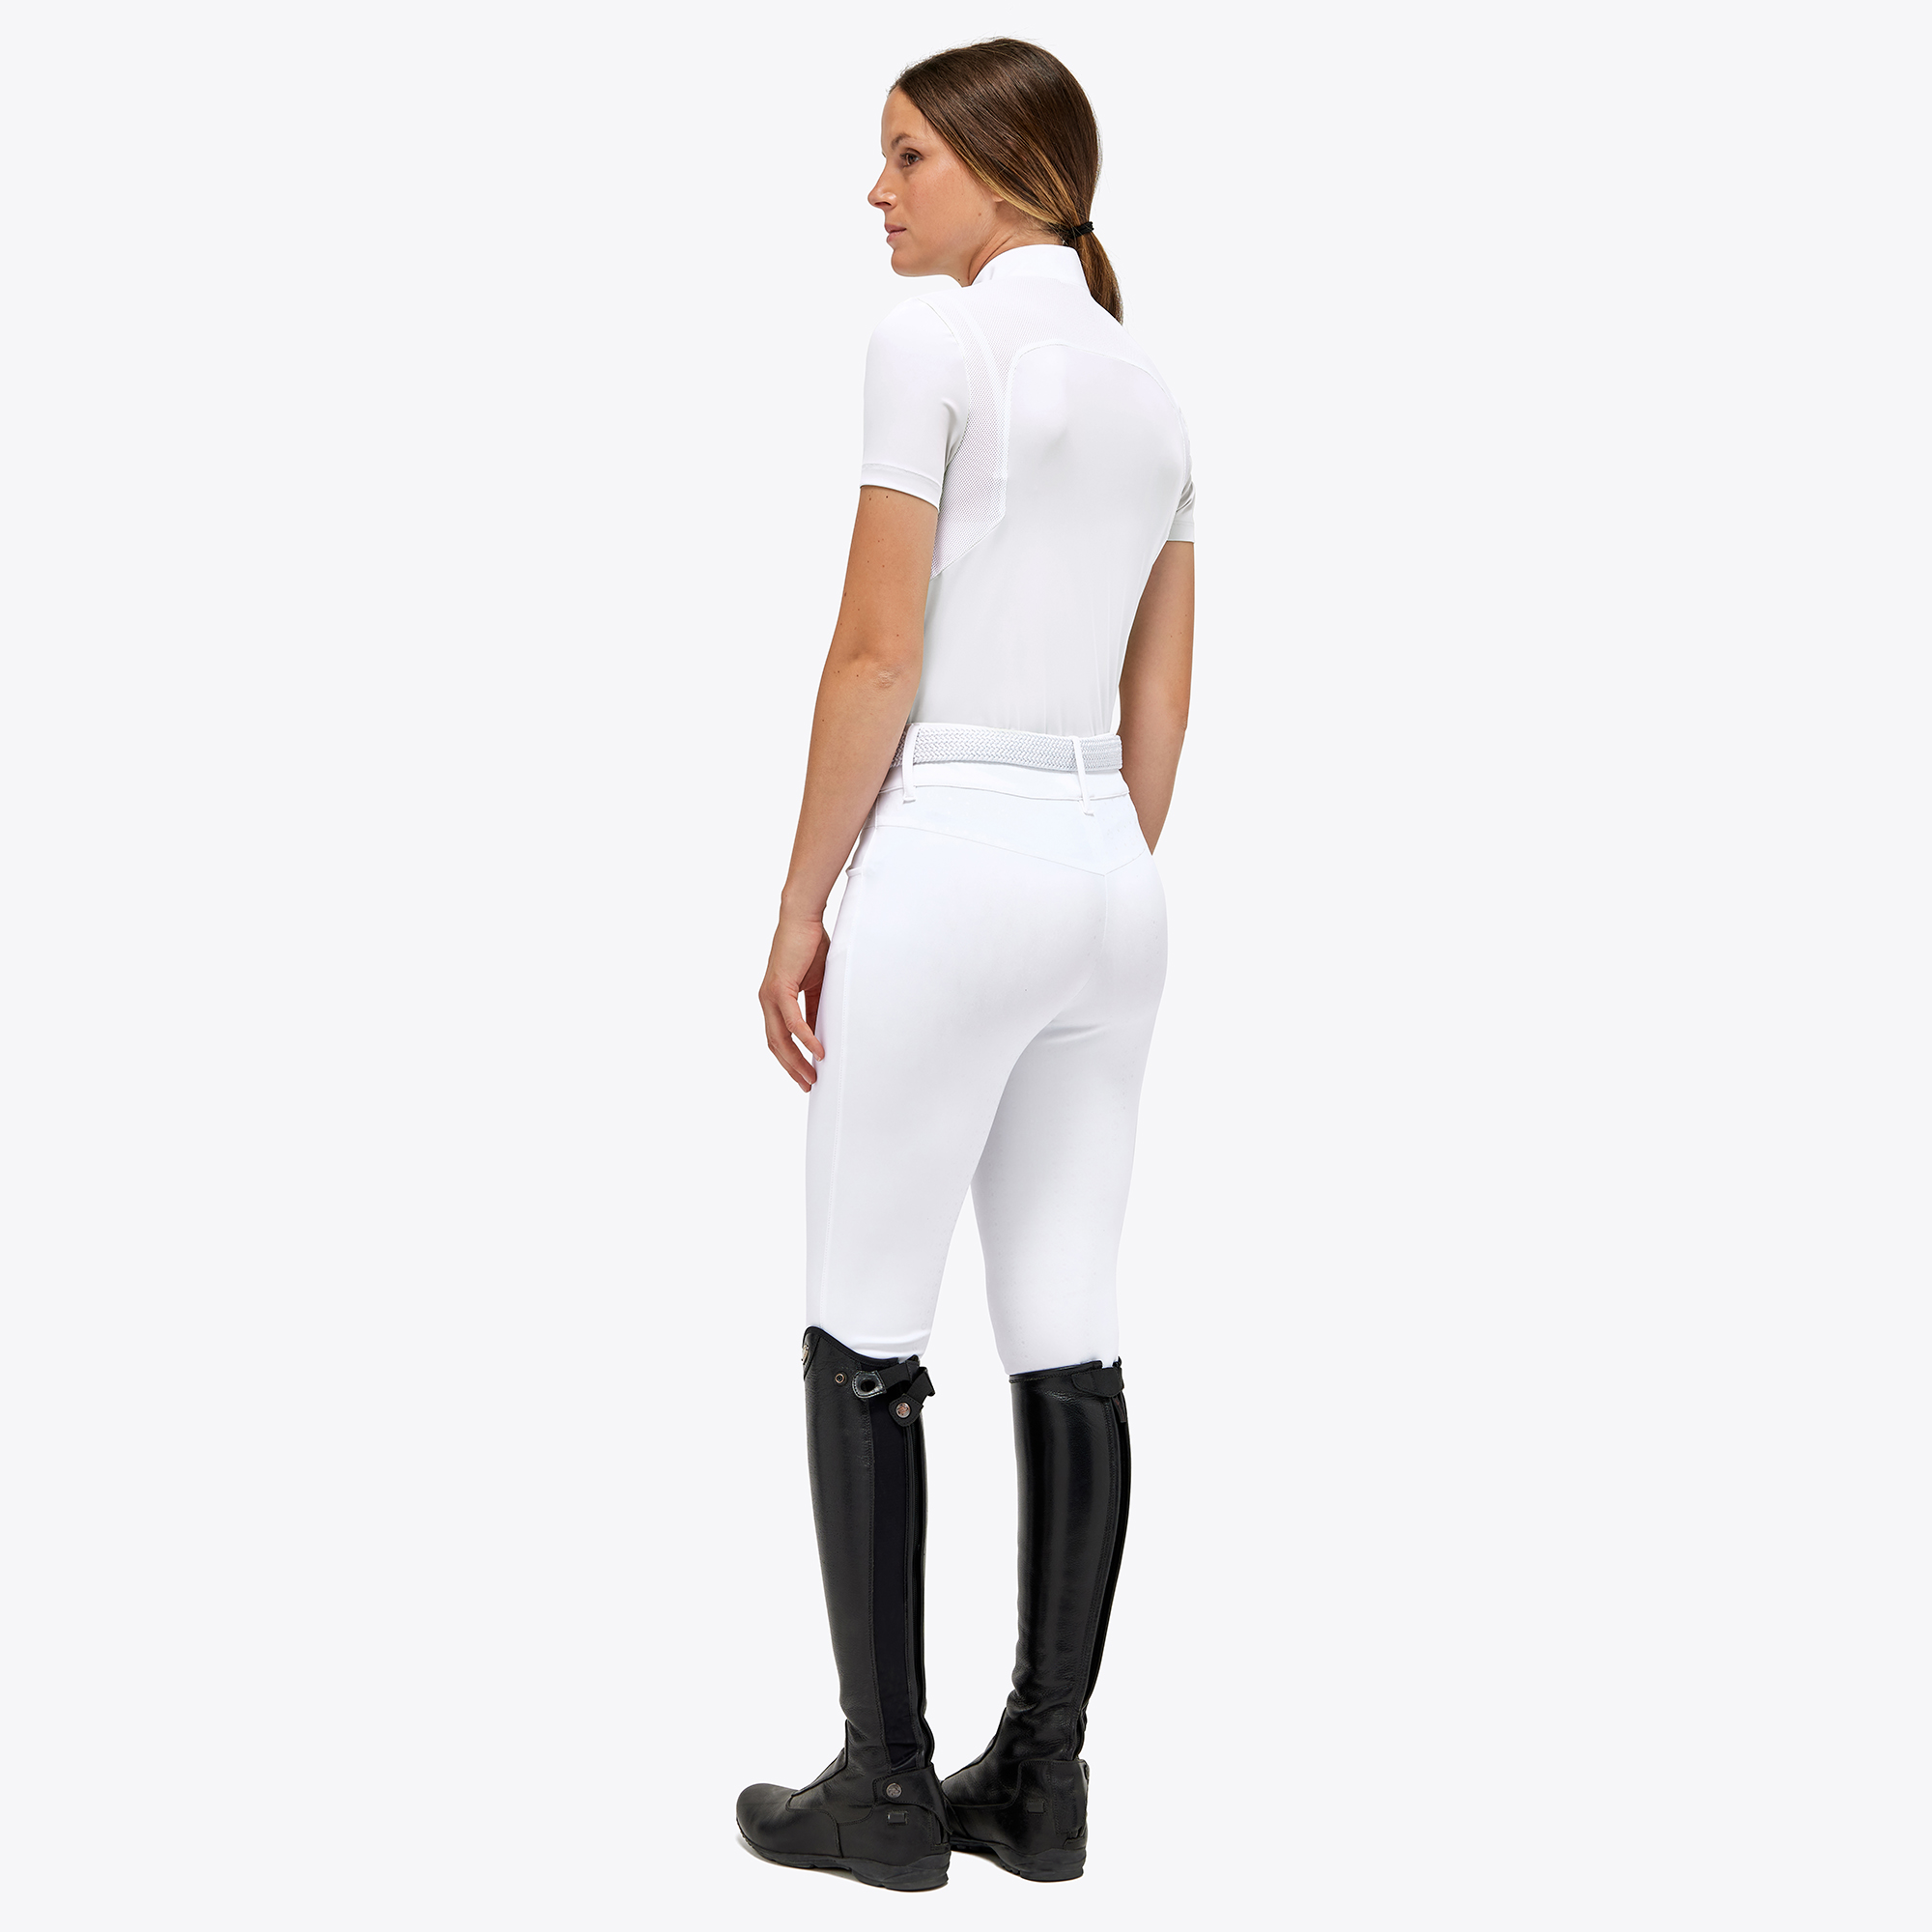 CAVALLERIA TOSCANA elegantes Damen Kurzarm Turniershirt Jersey Mesh - white/knit - M - 2